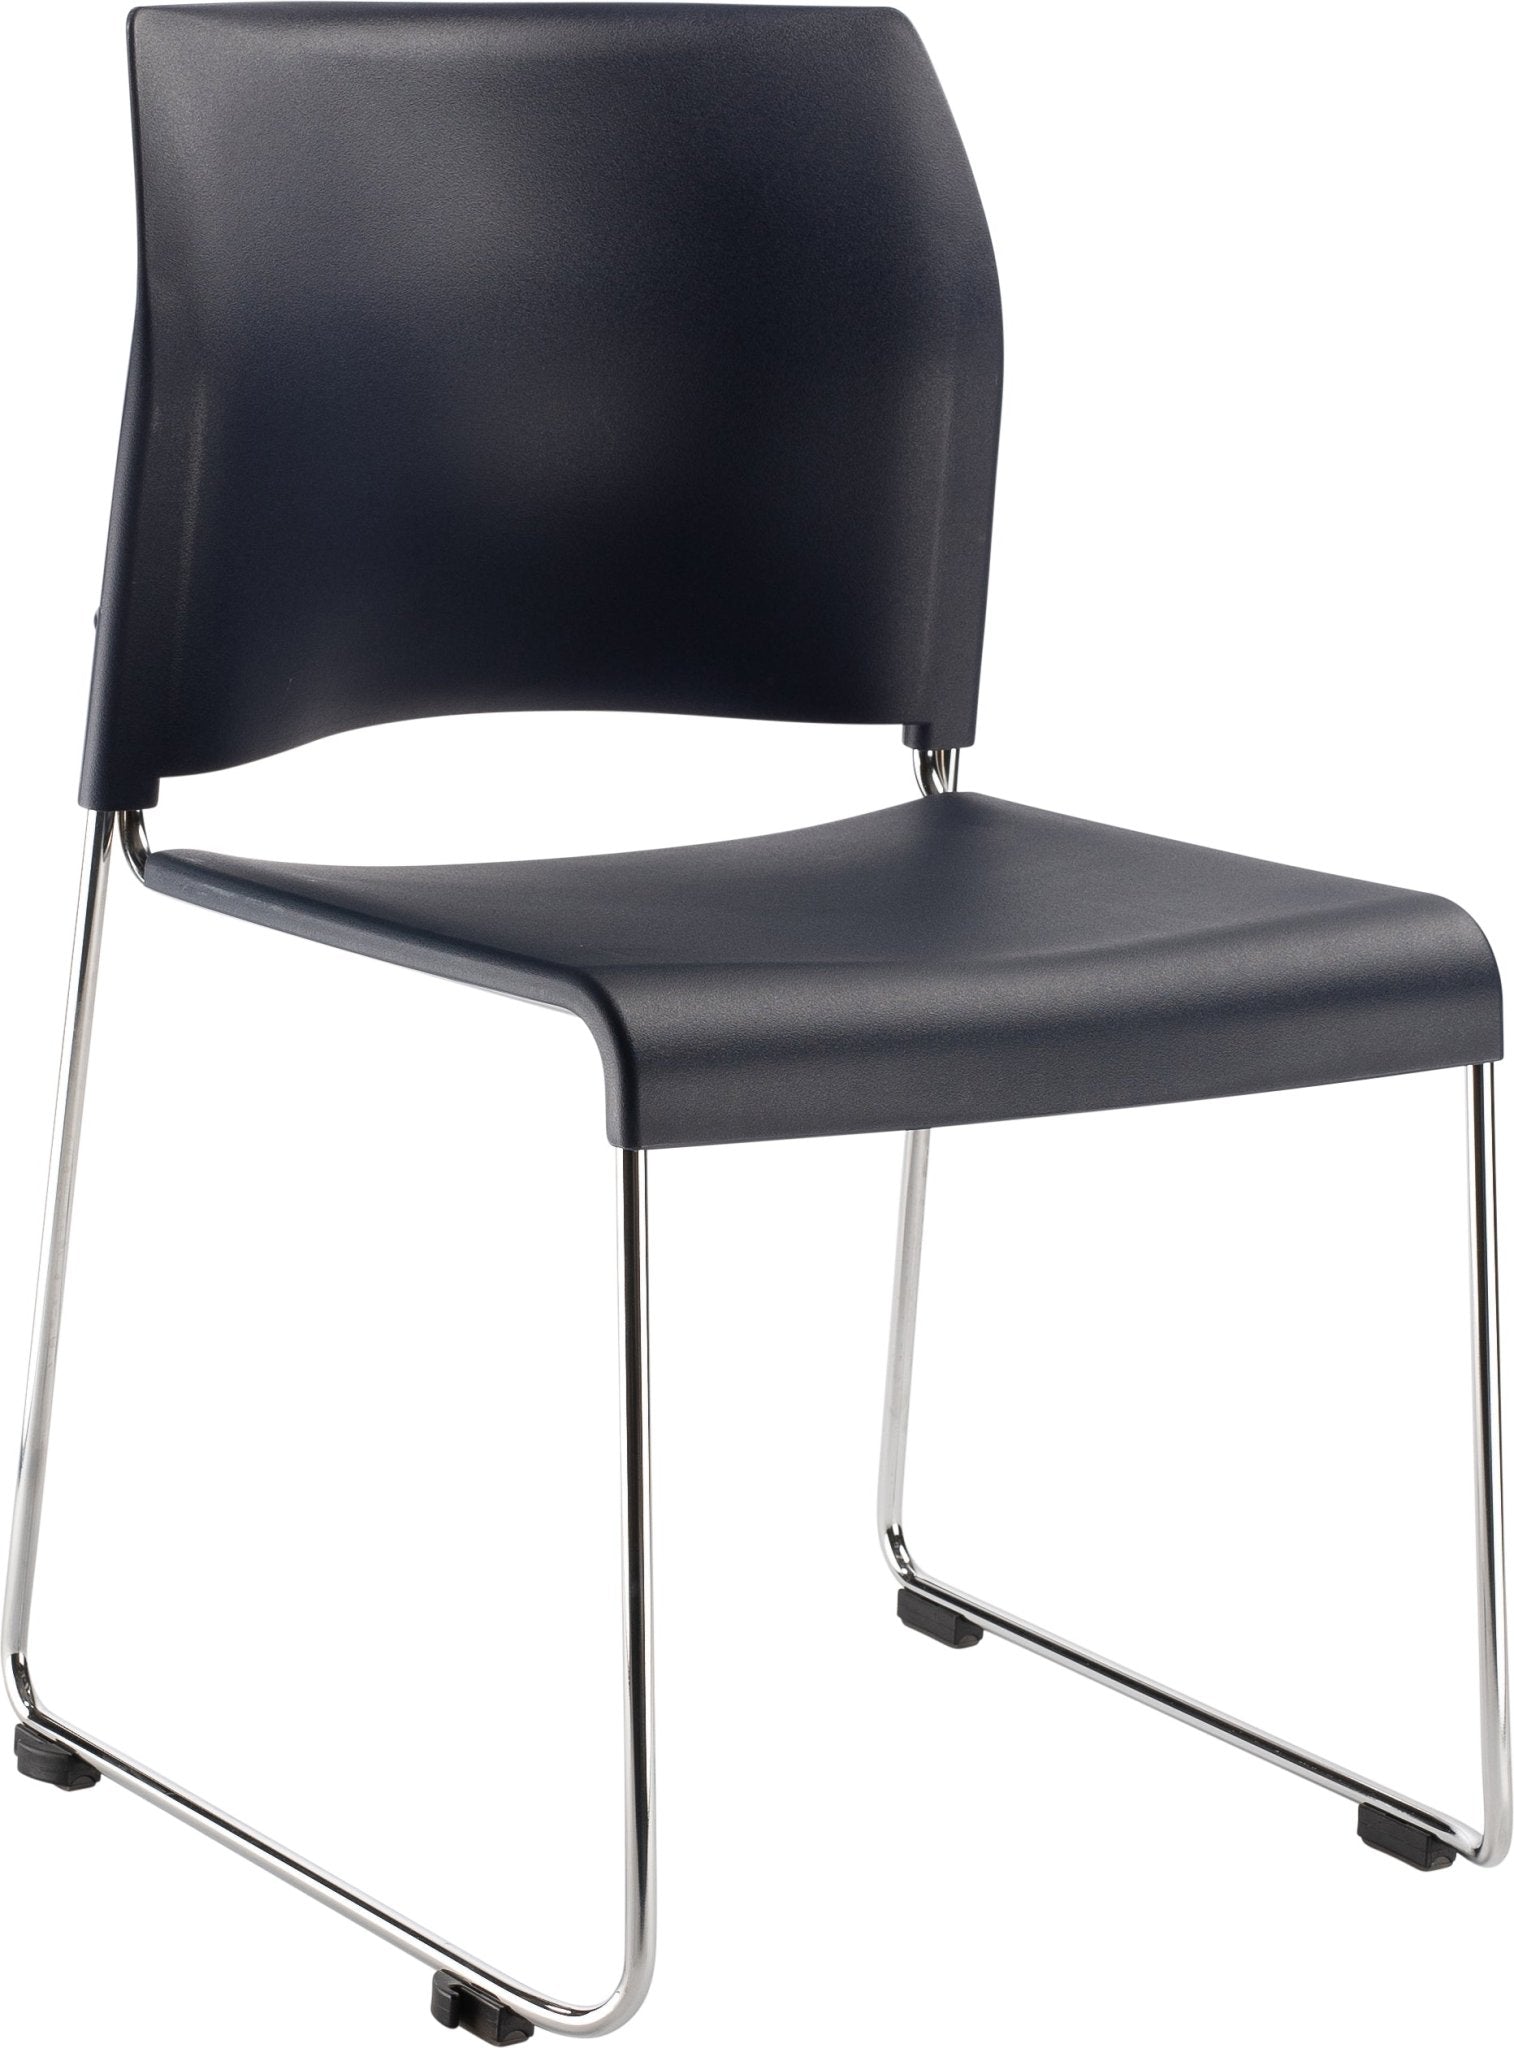 NPS 8800 Series Cafetorium Plastic Stack Chair (National Public Seating NPS-8820-11-20) - SchoolOutlet